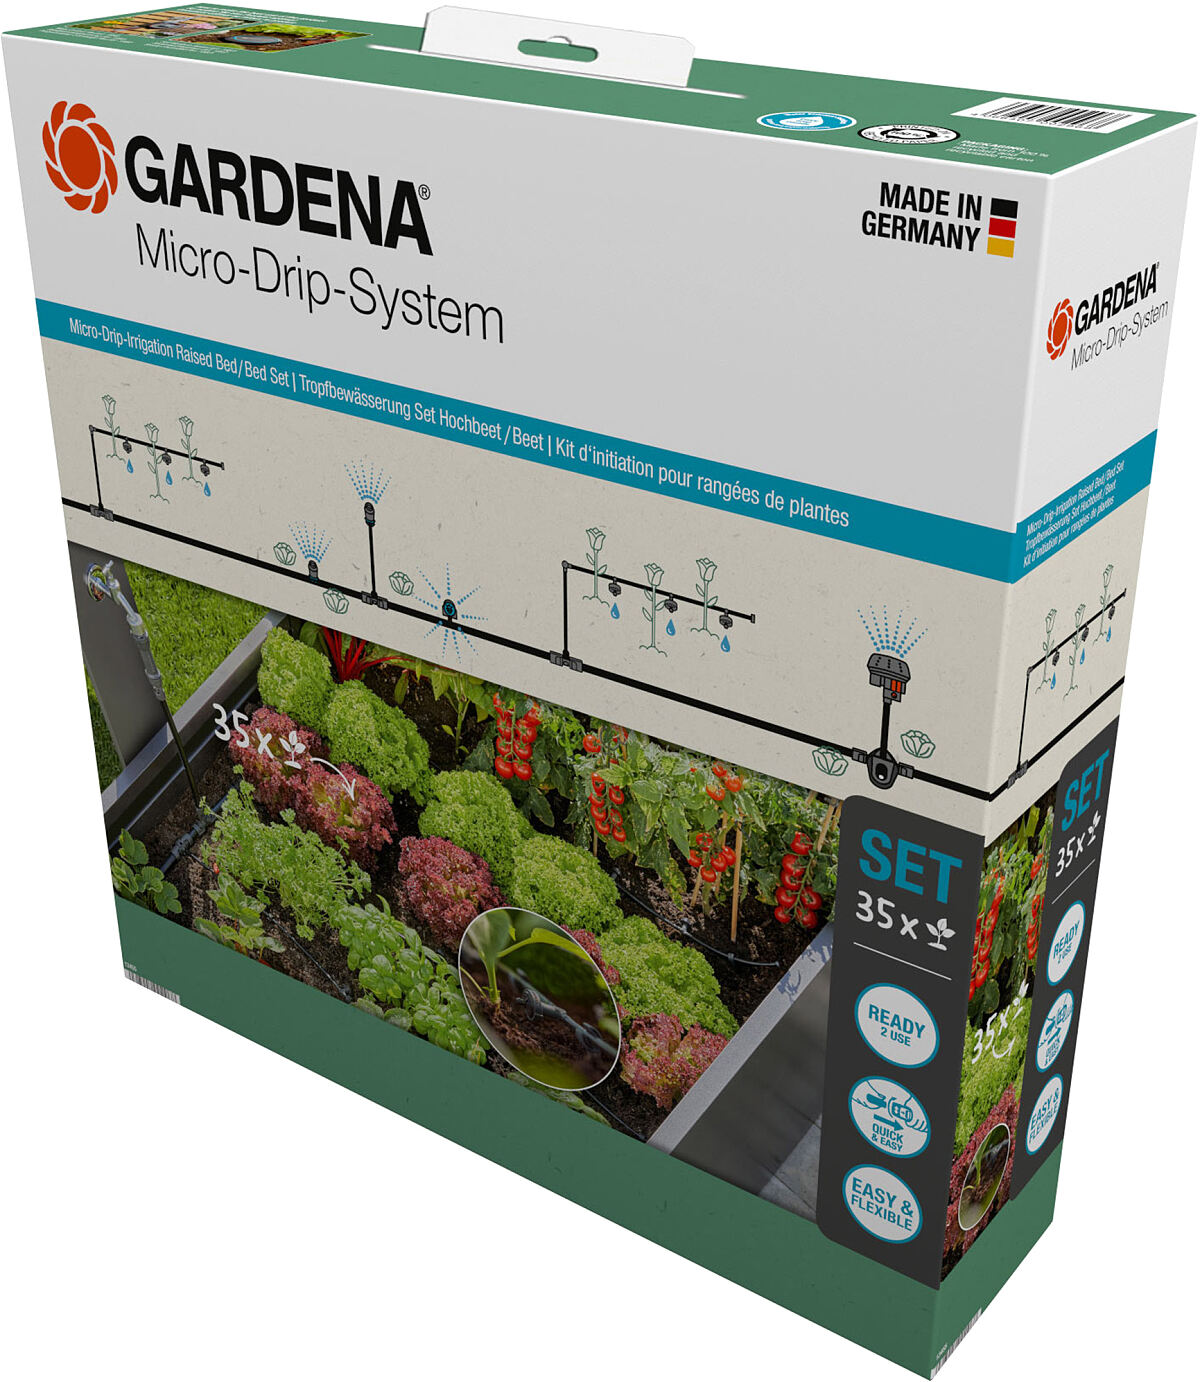 GARDENA Micro-Drip-Irrigation  Raised BedBed Set (35 plants)